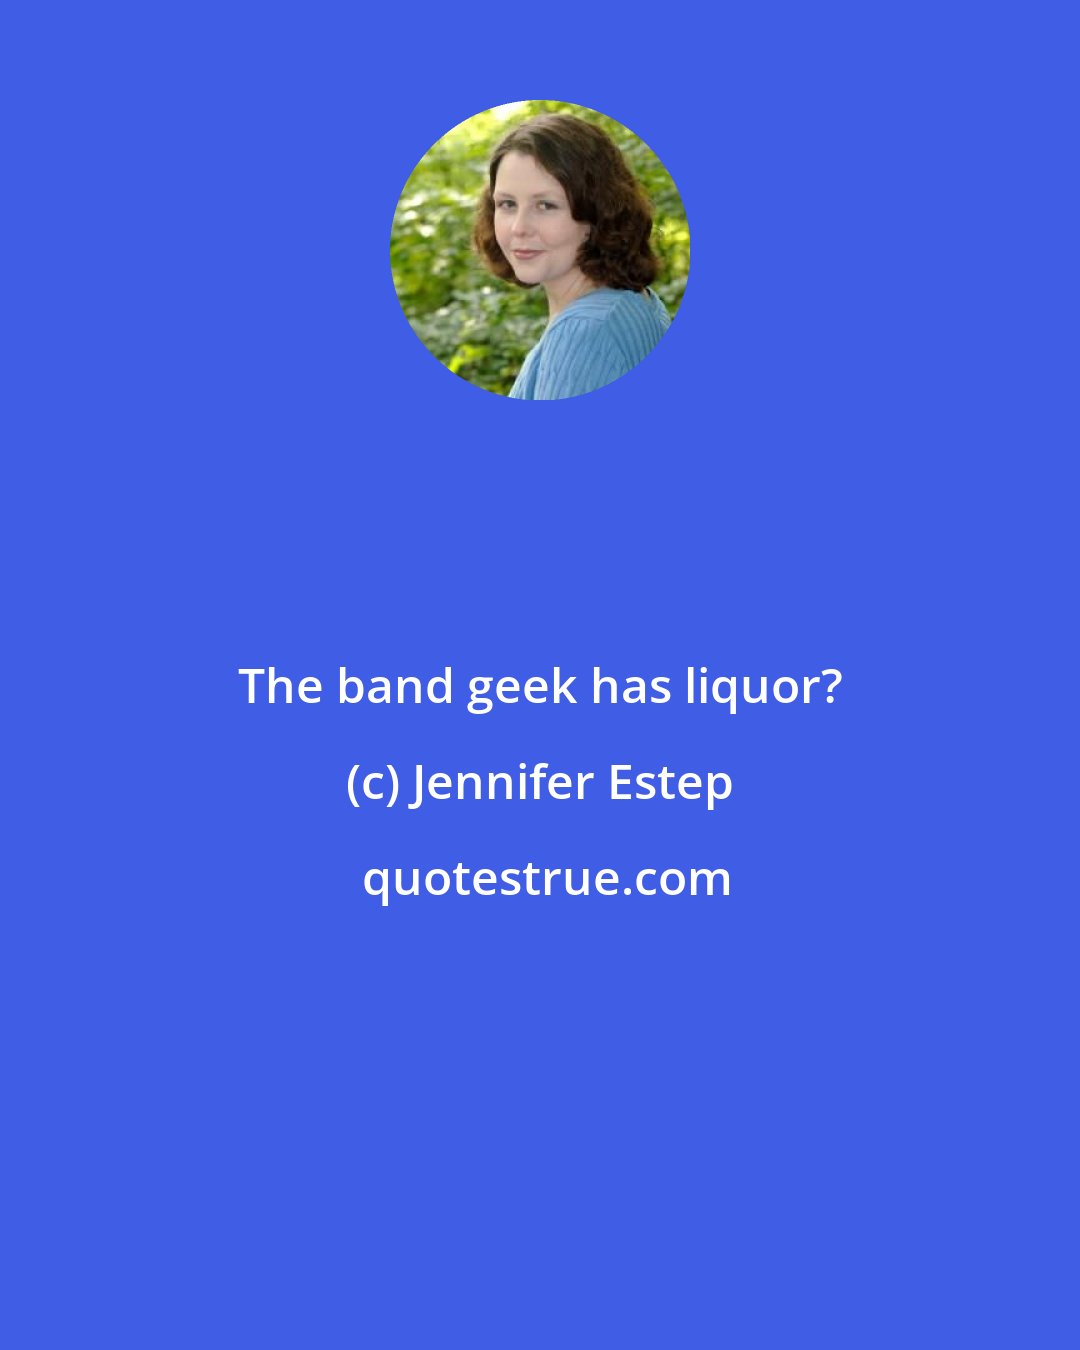 Jennifer Estep: The band geek has liquor?